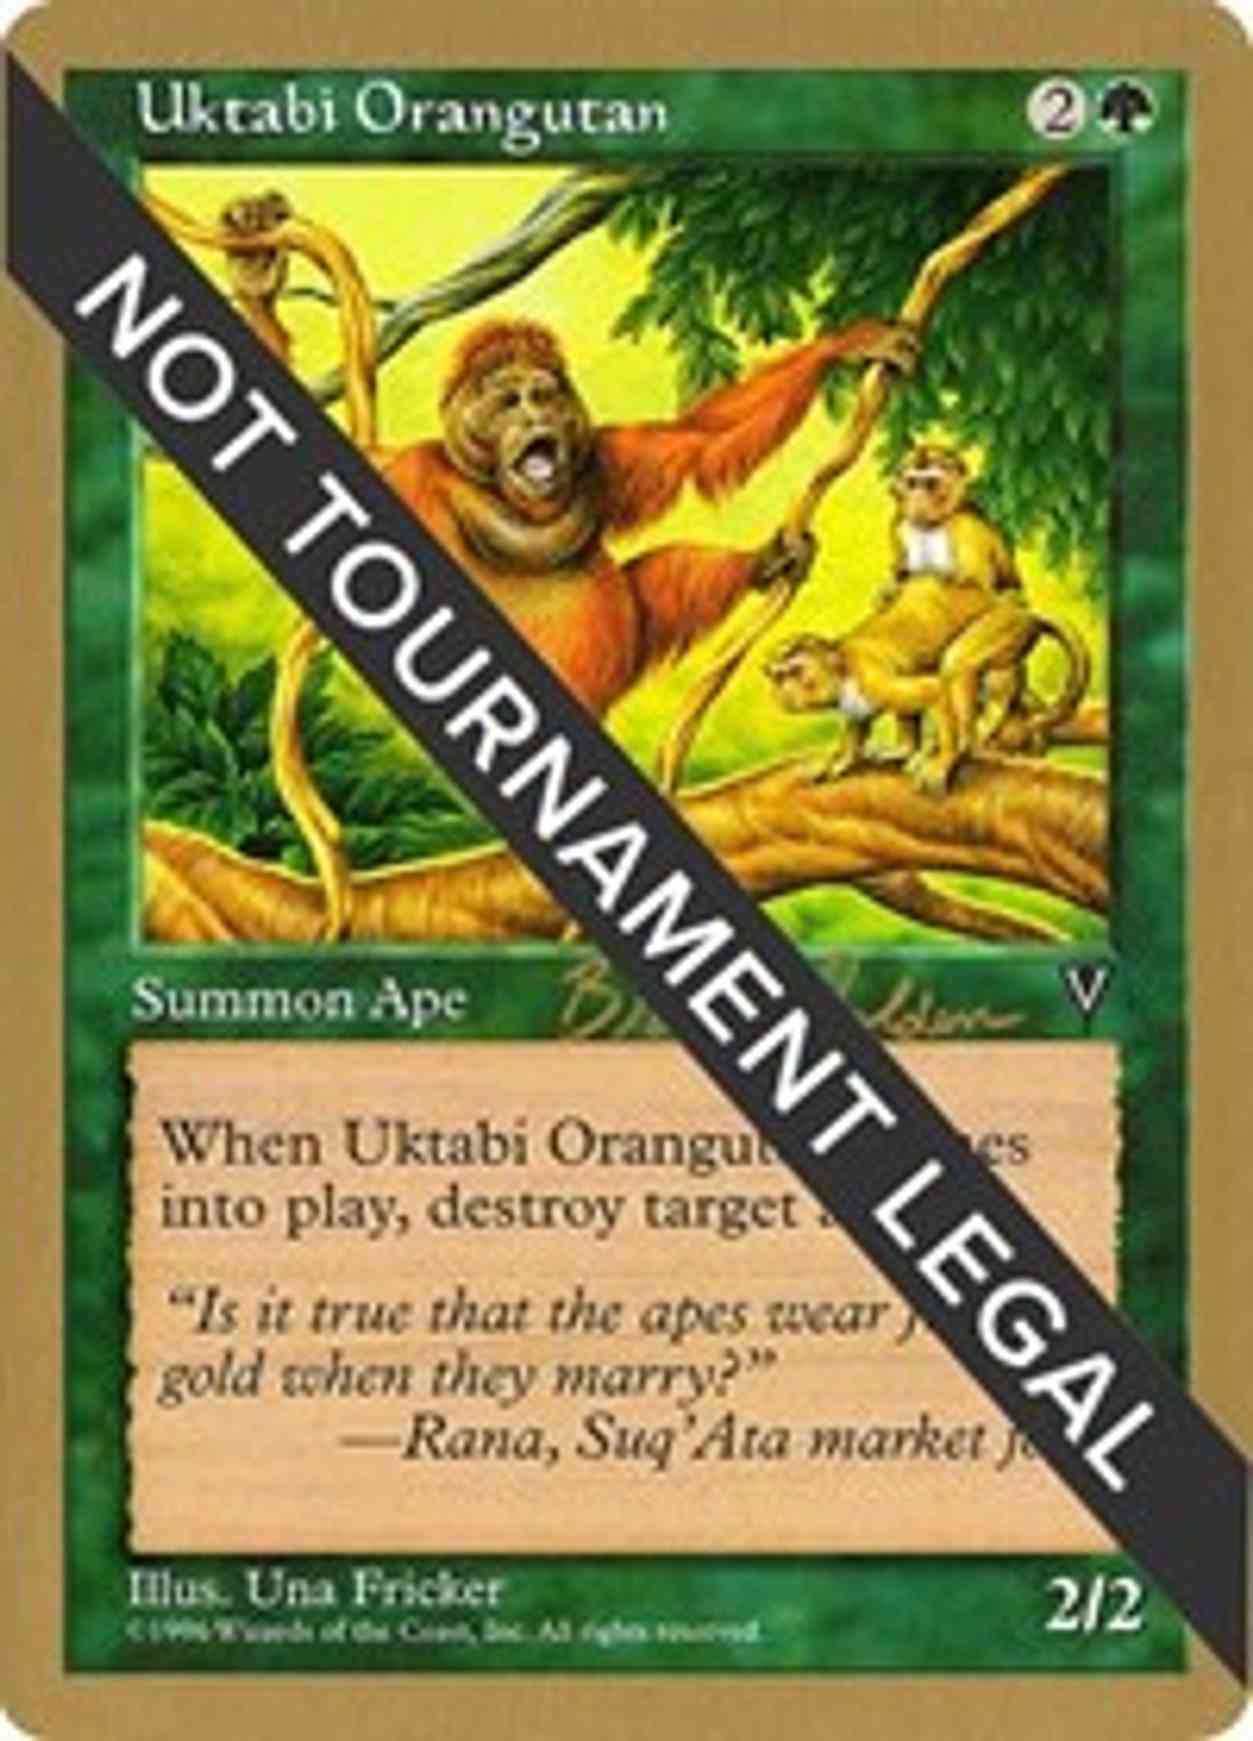 Uktabi Orangutan - 1998 Brian Selden (VIS) magic card front